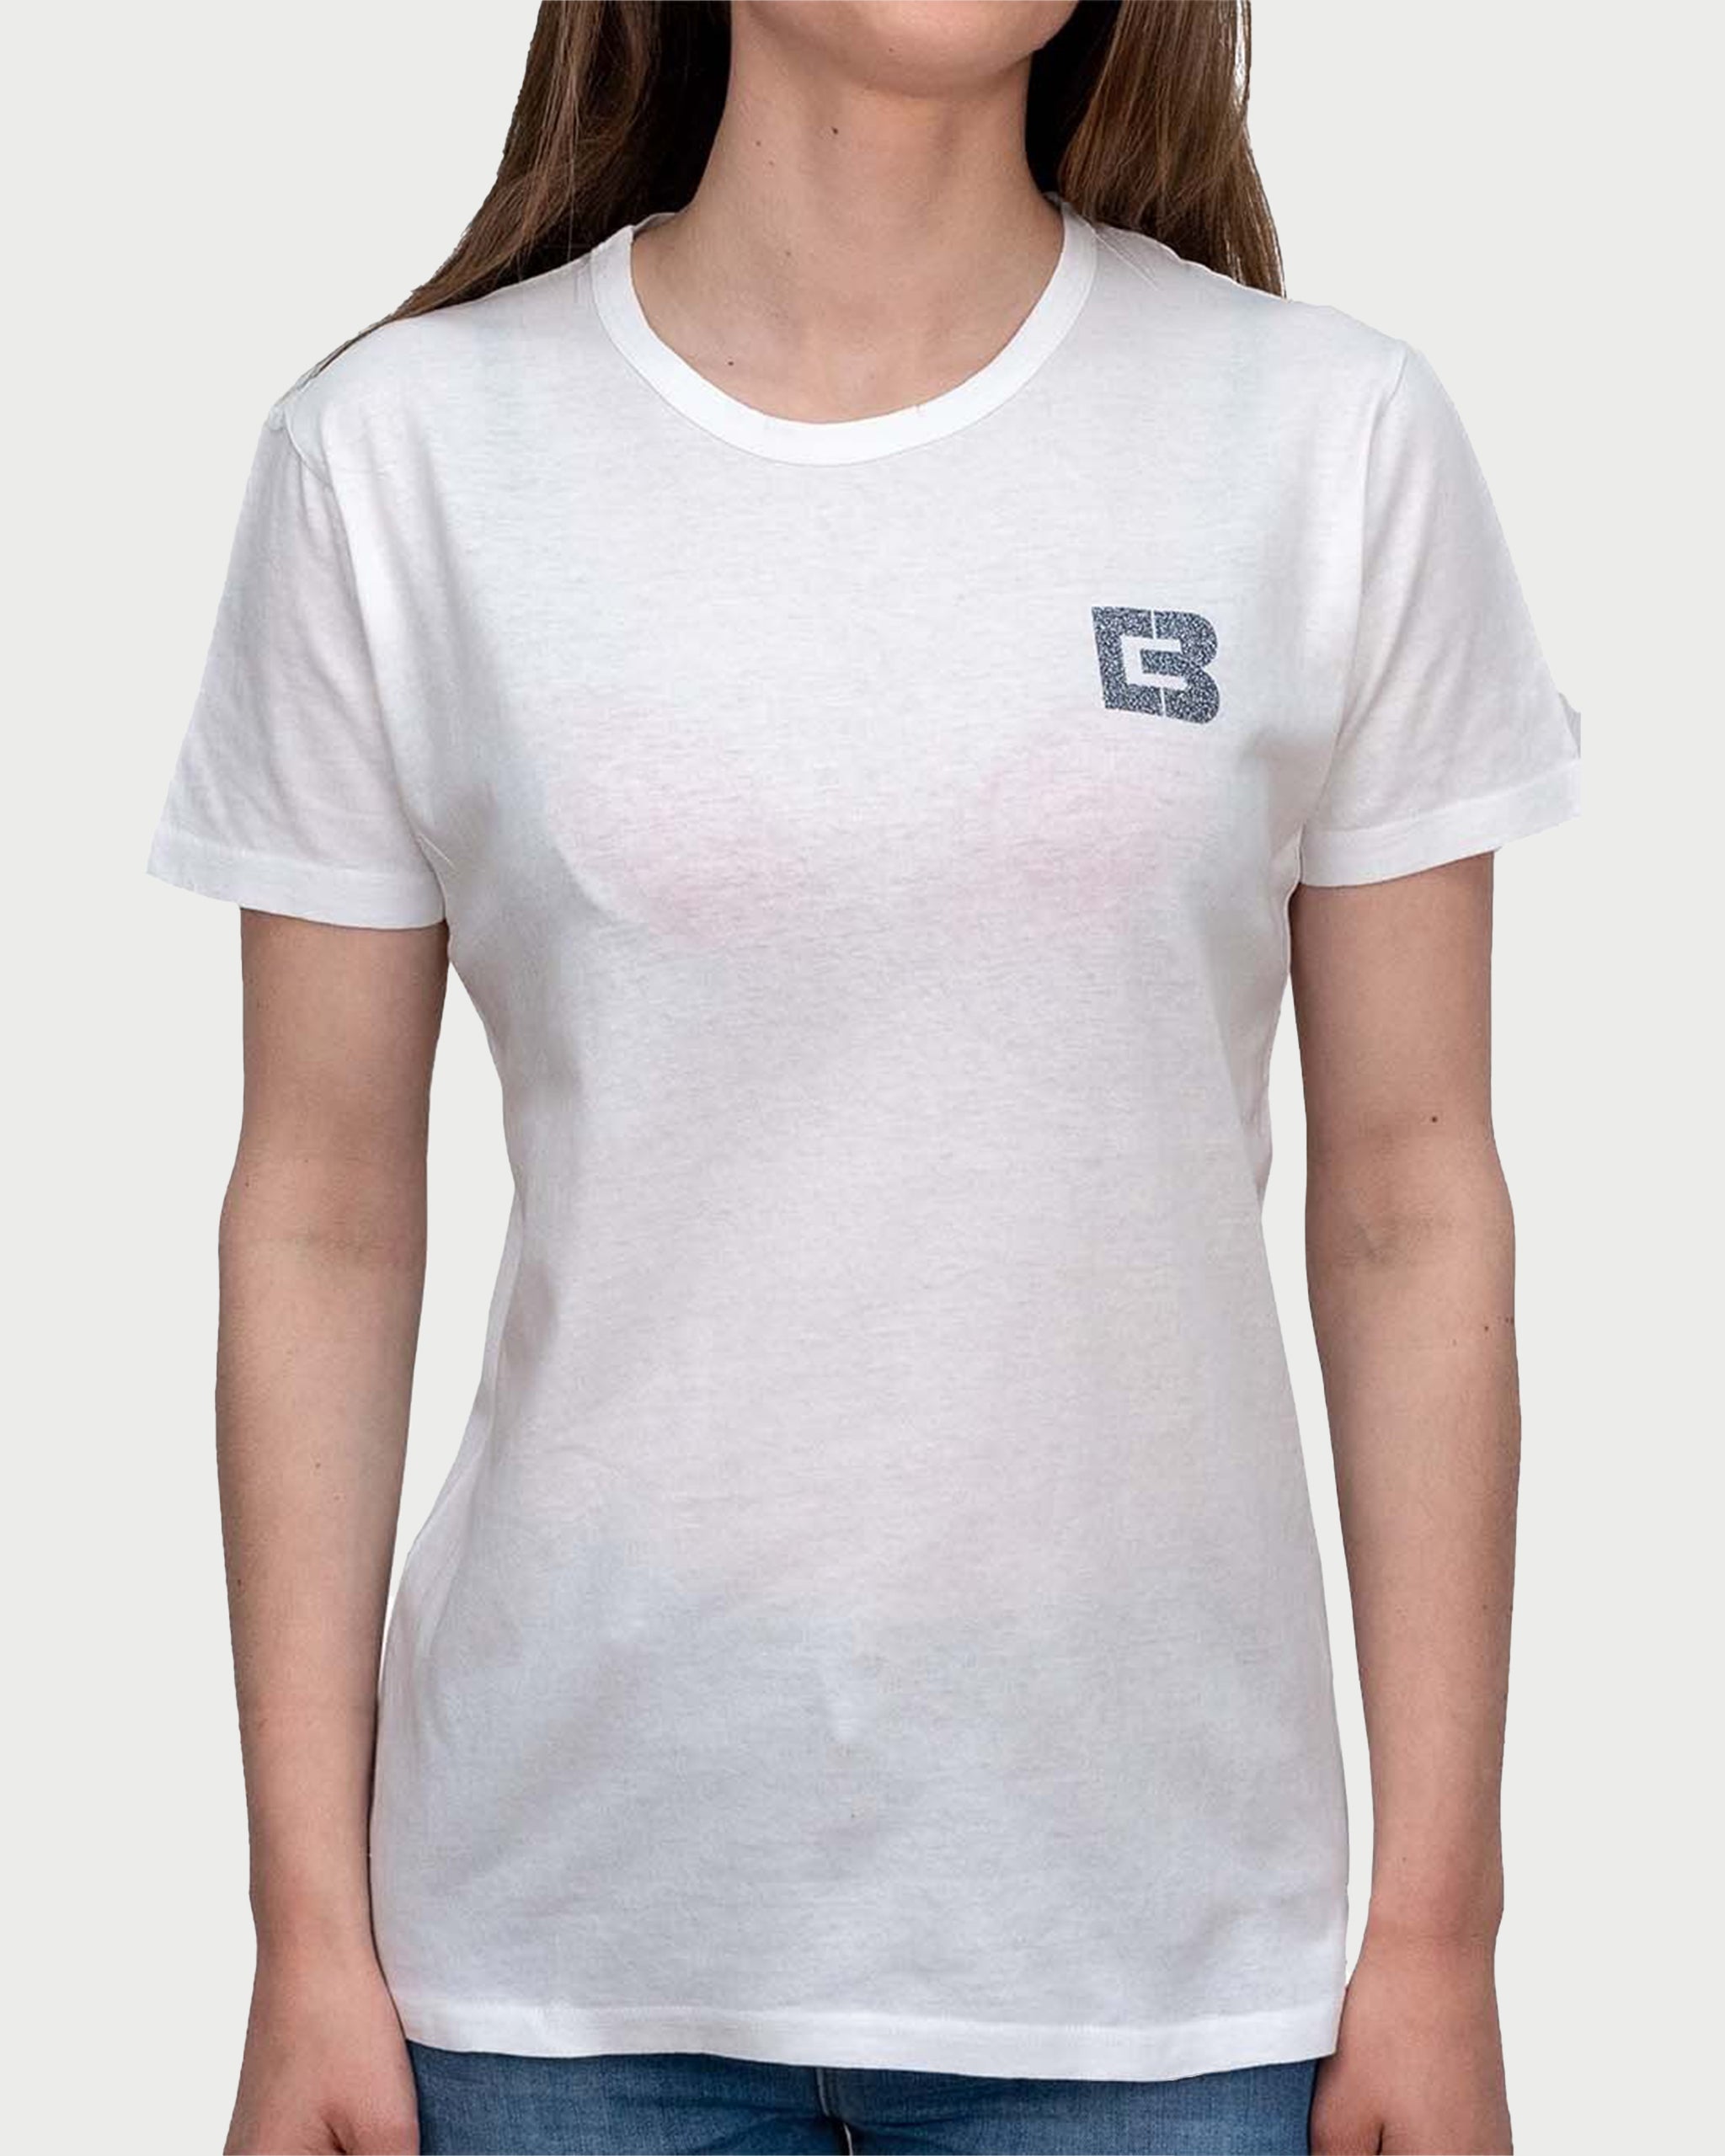 MINIMAL WHITE - tricou minimalist pentru femei